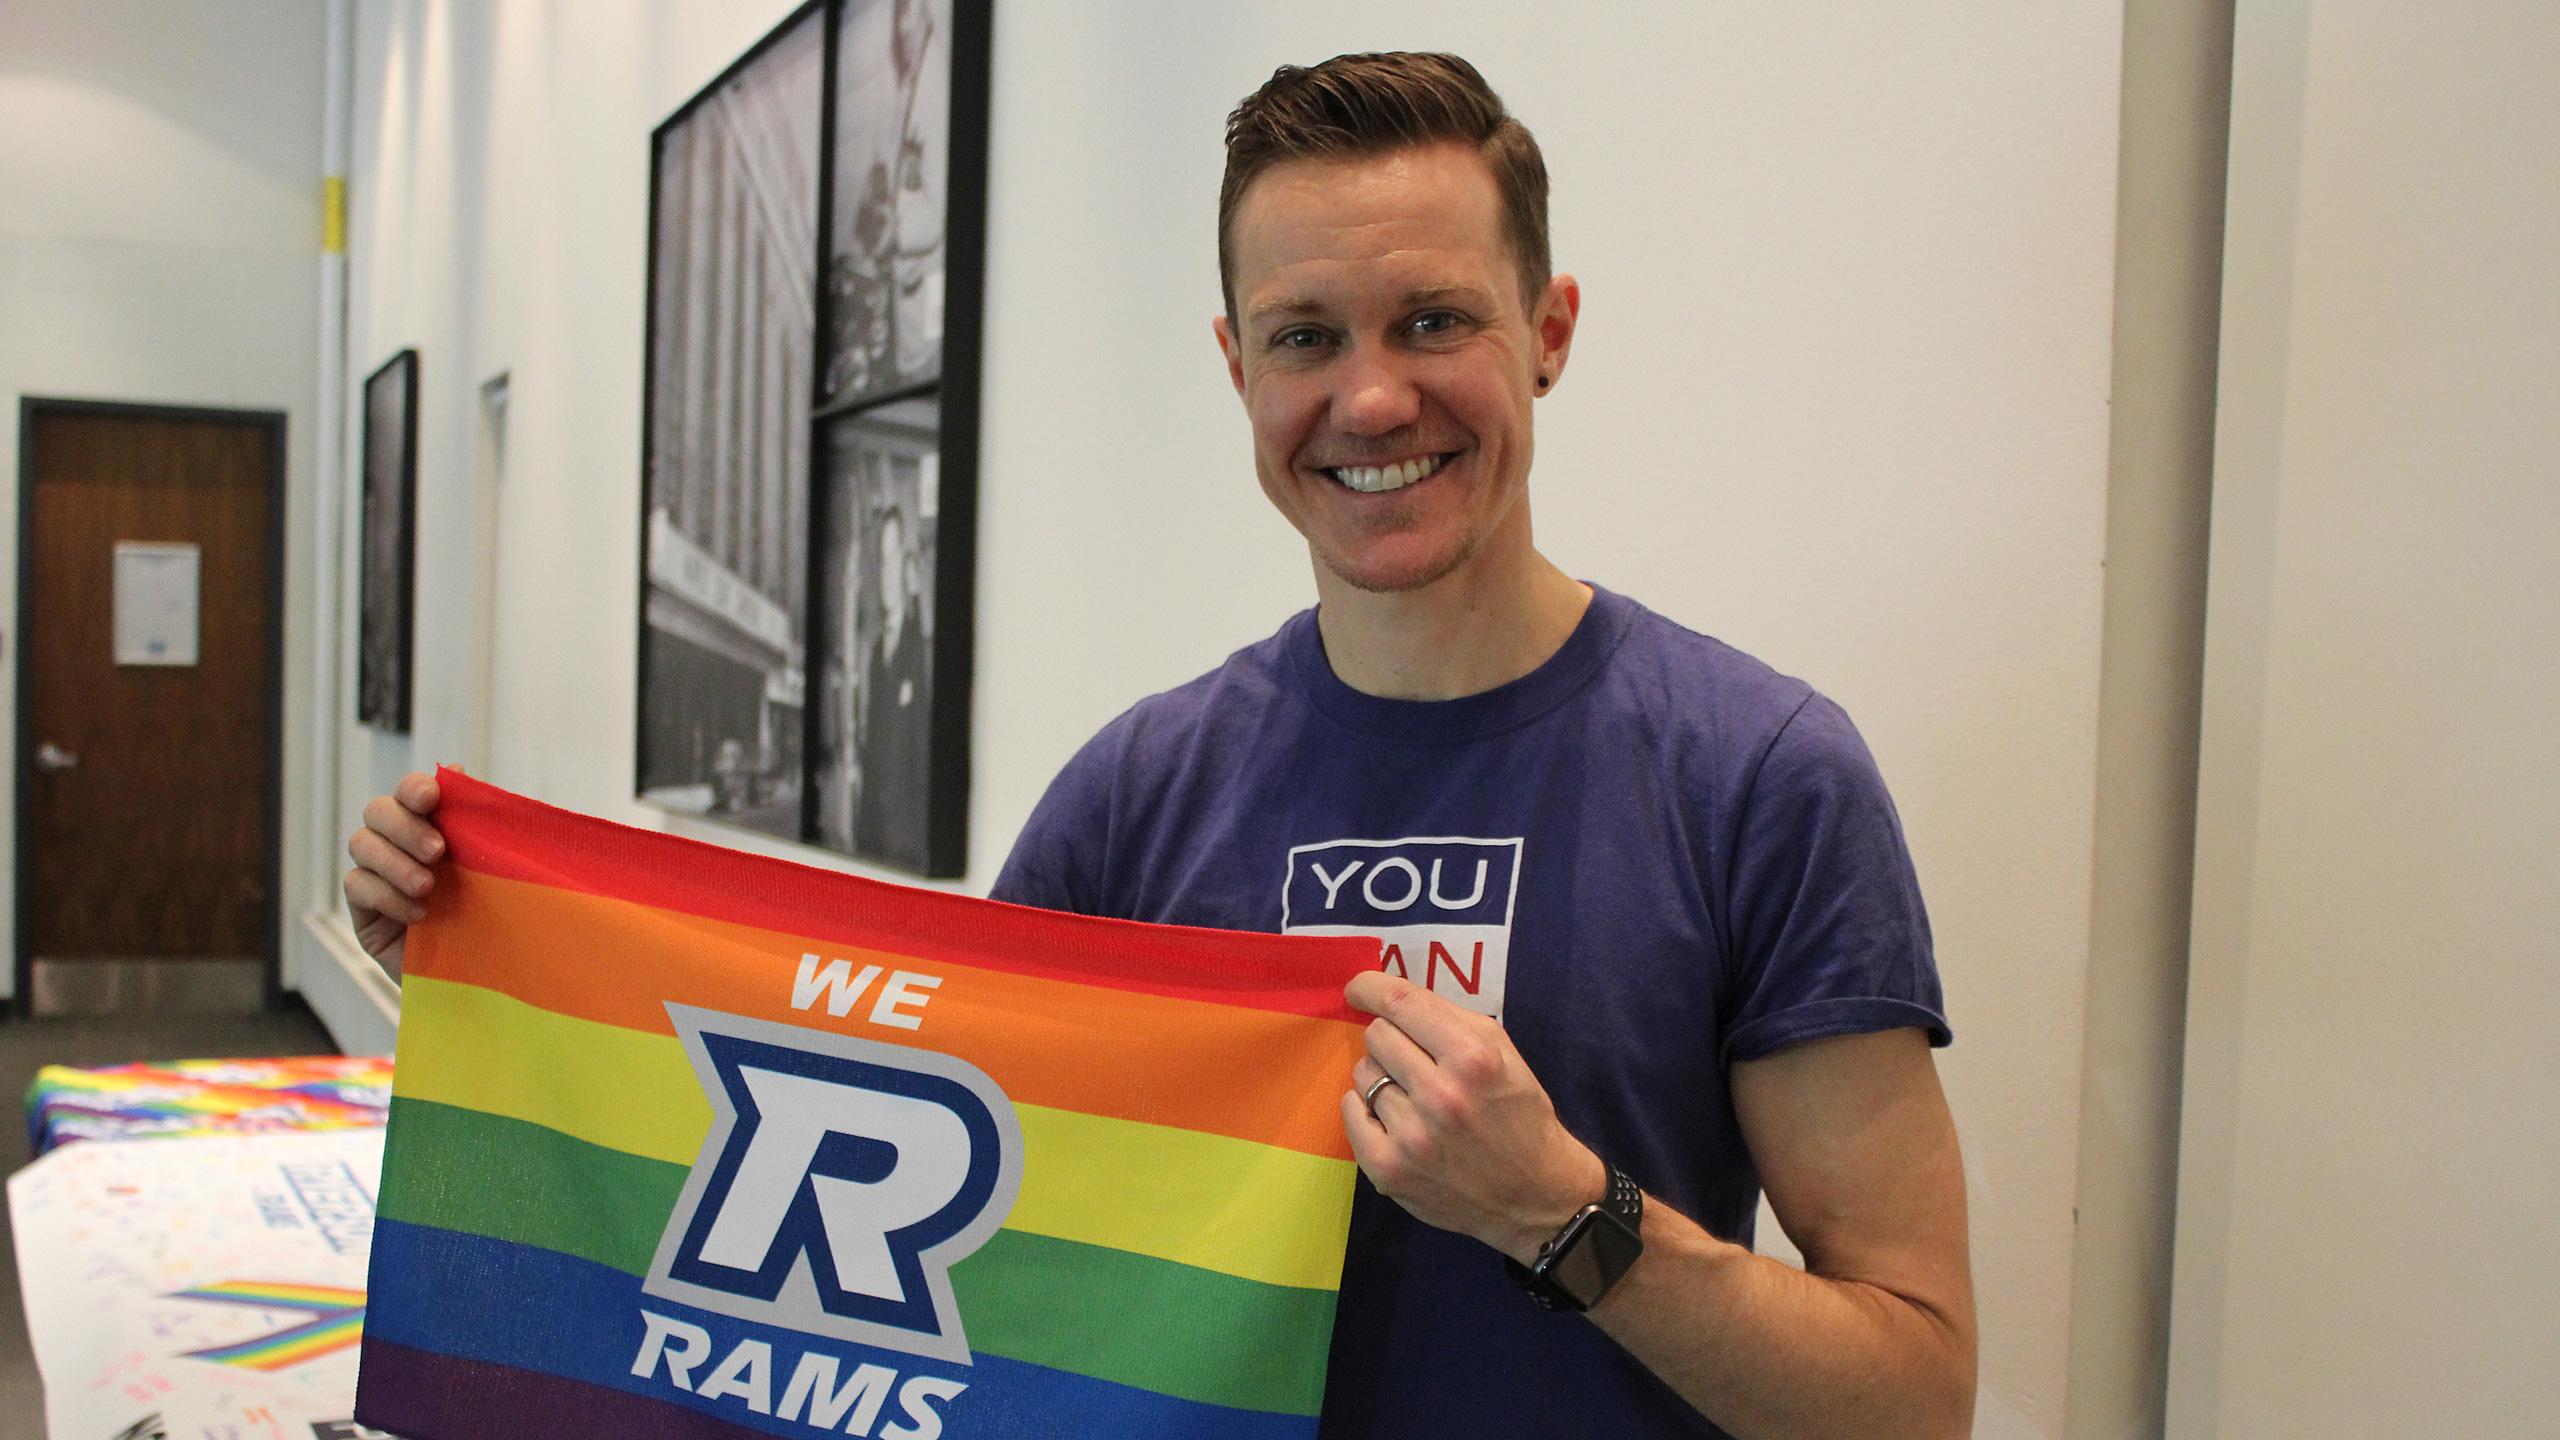 Chris Mosier poses with a we r rams rainbow flag